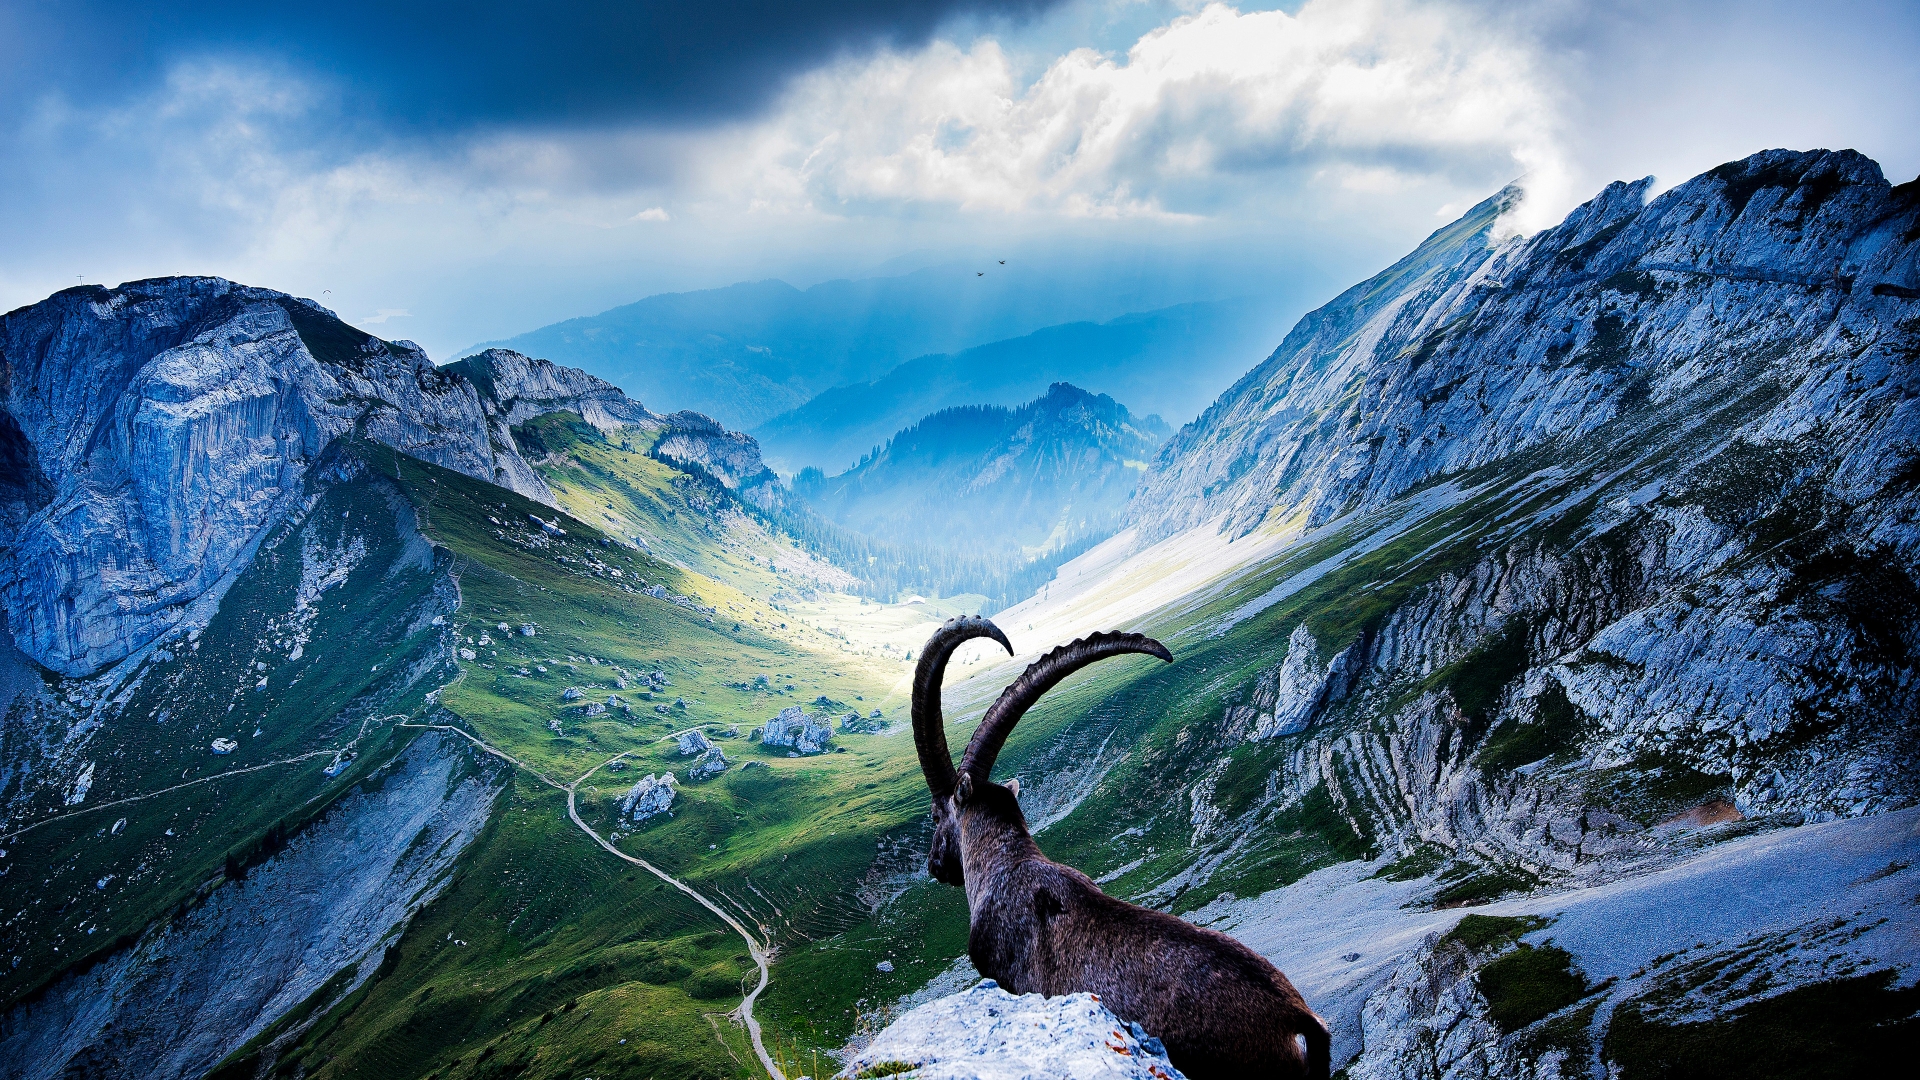 Goat at Mount Pilatus for 1920 x 1080 HDTV 1080p resolution